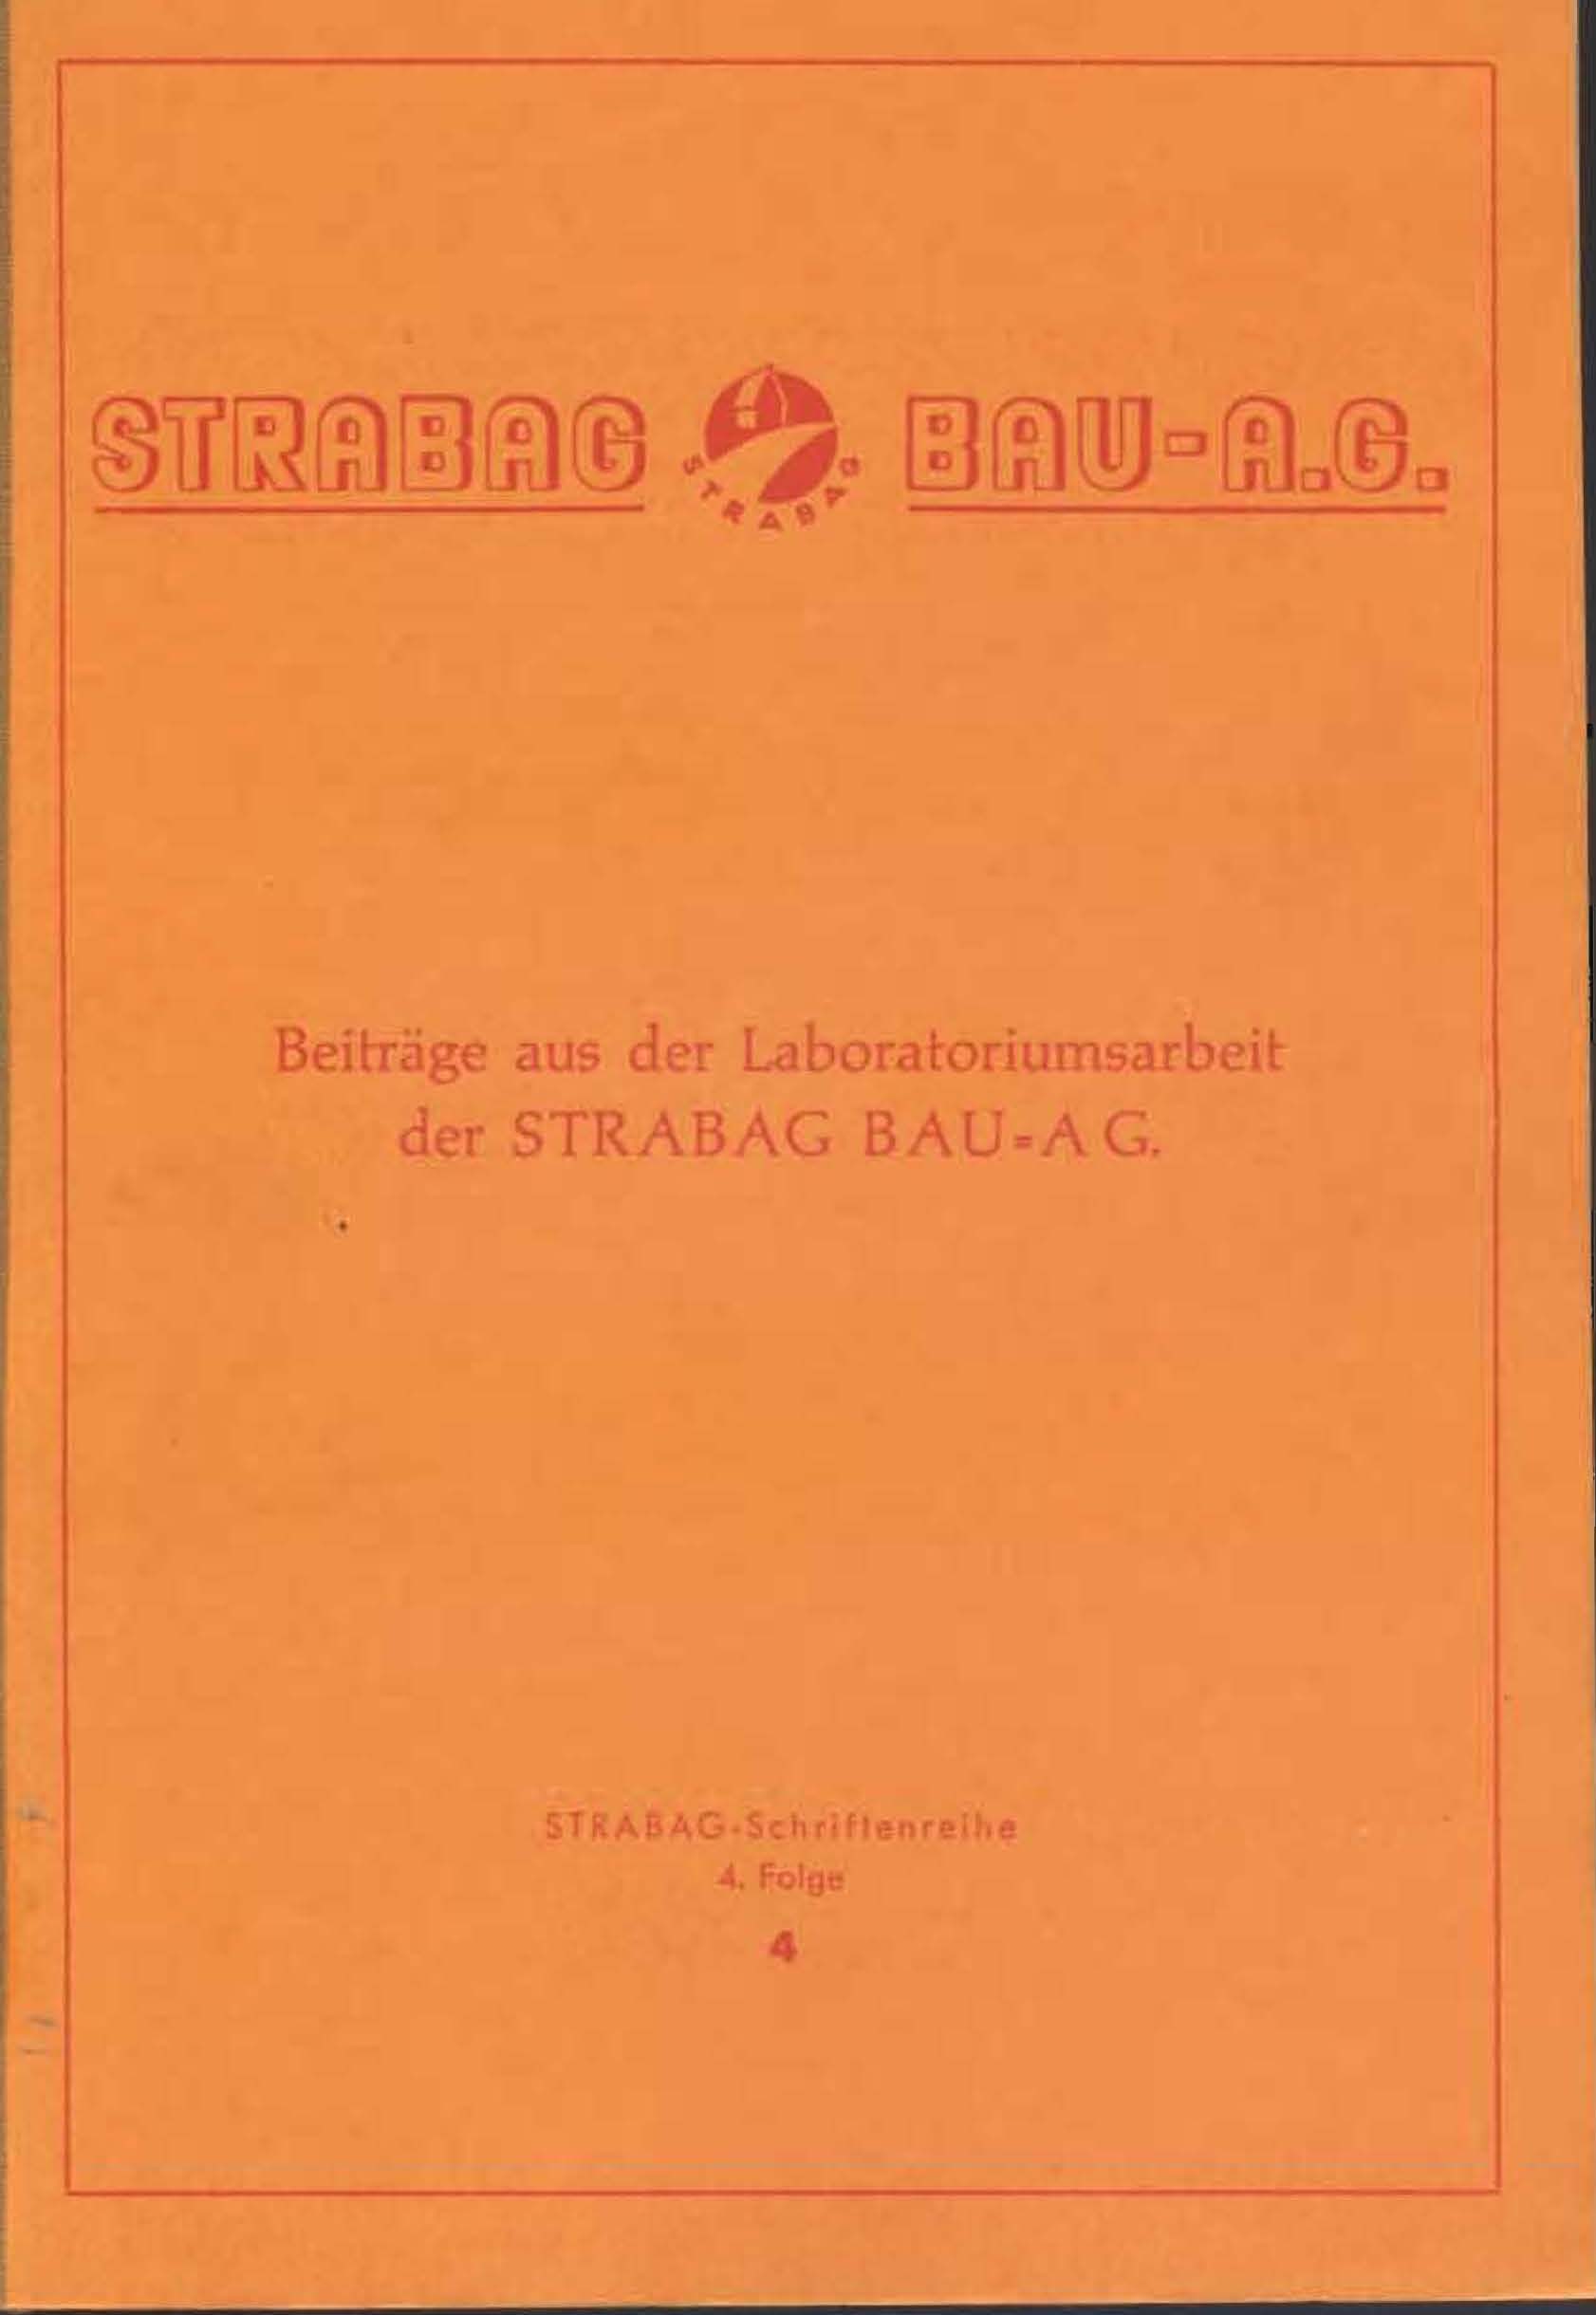 STRABAG BAU AG.